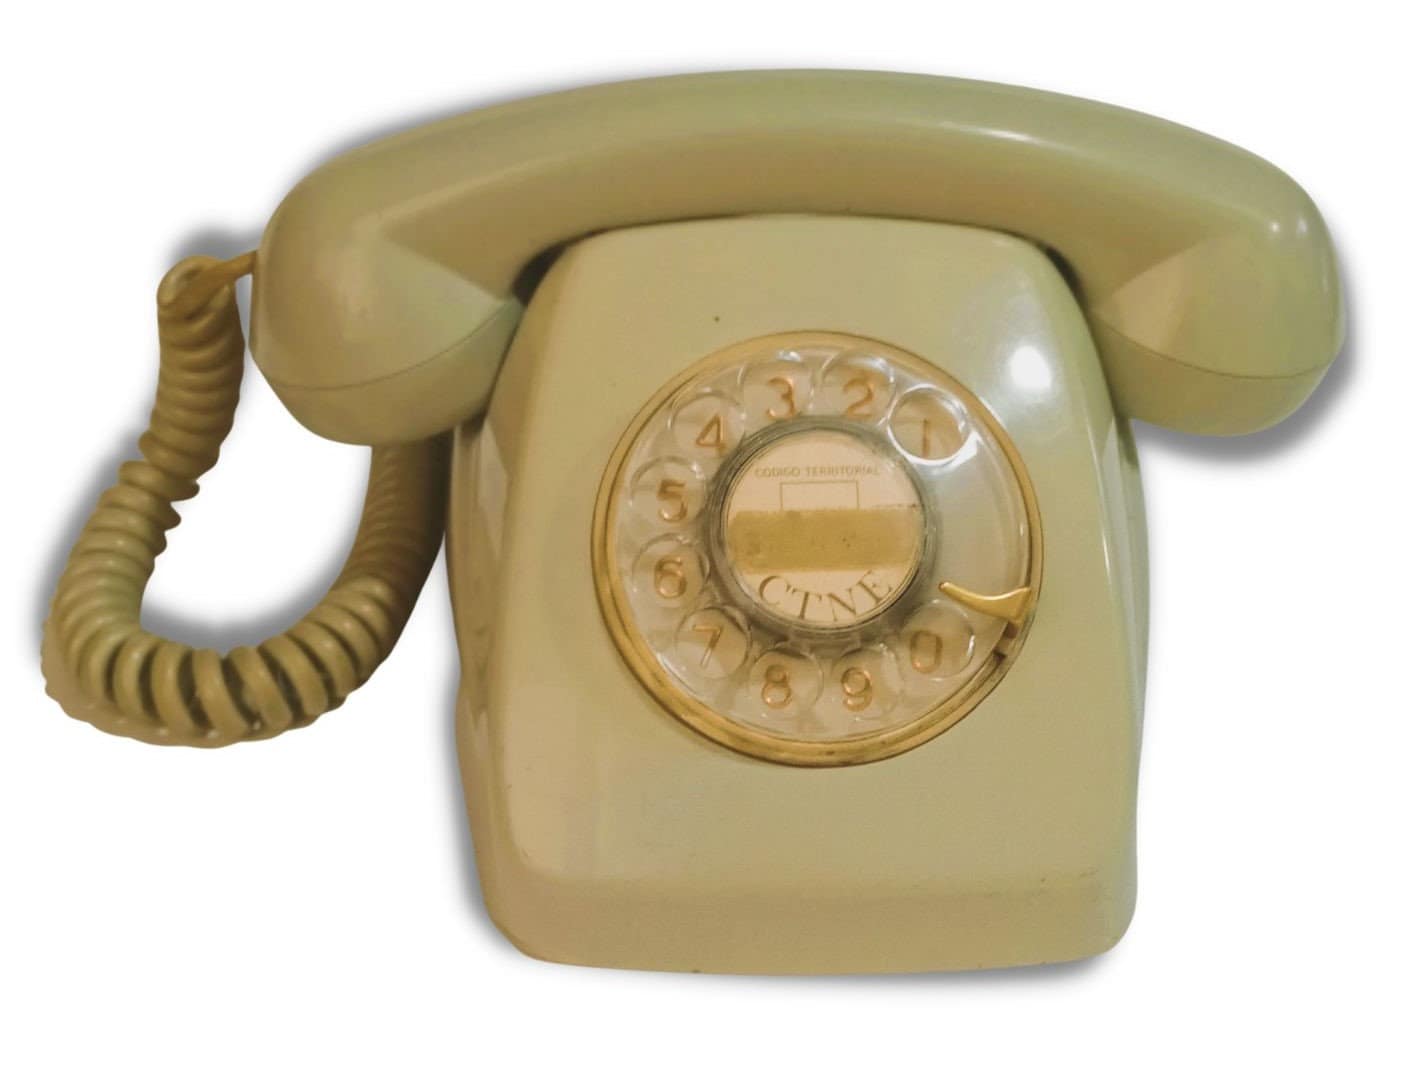 Telefonos antiguos -  España